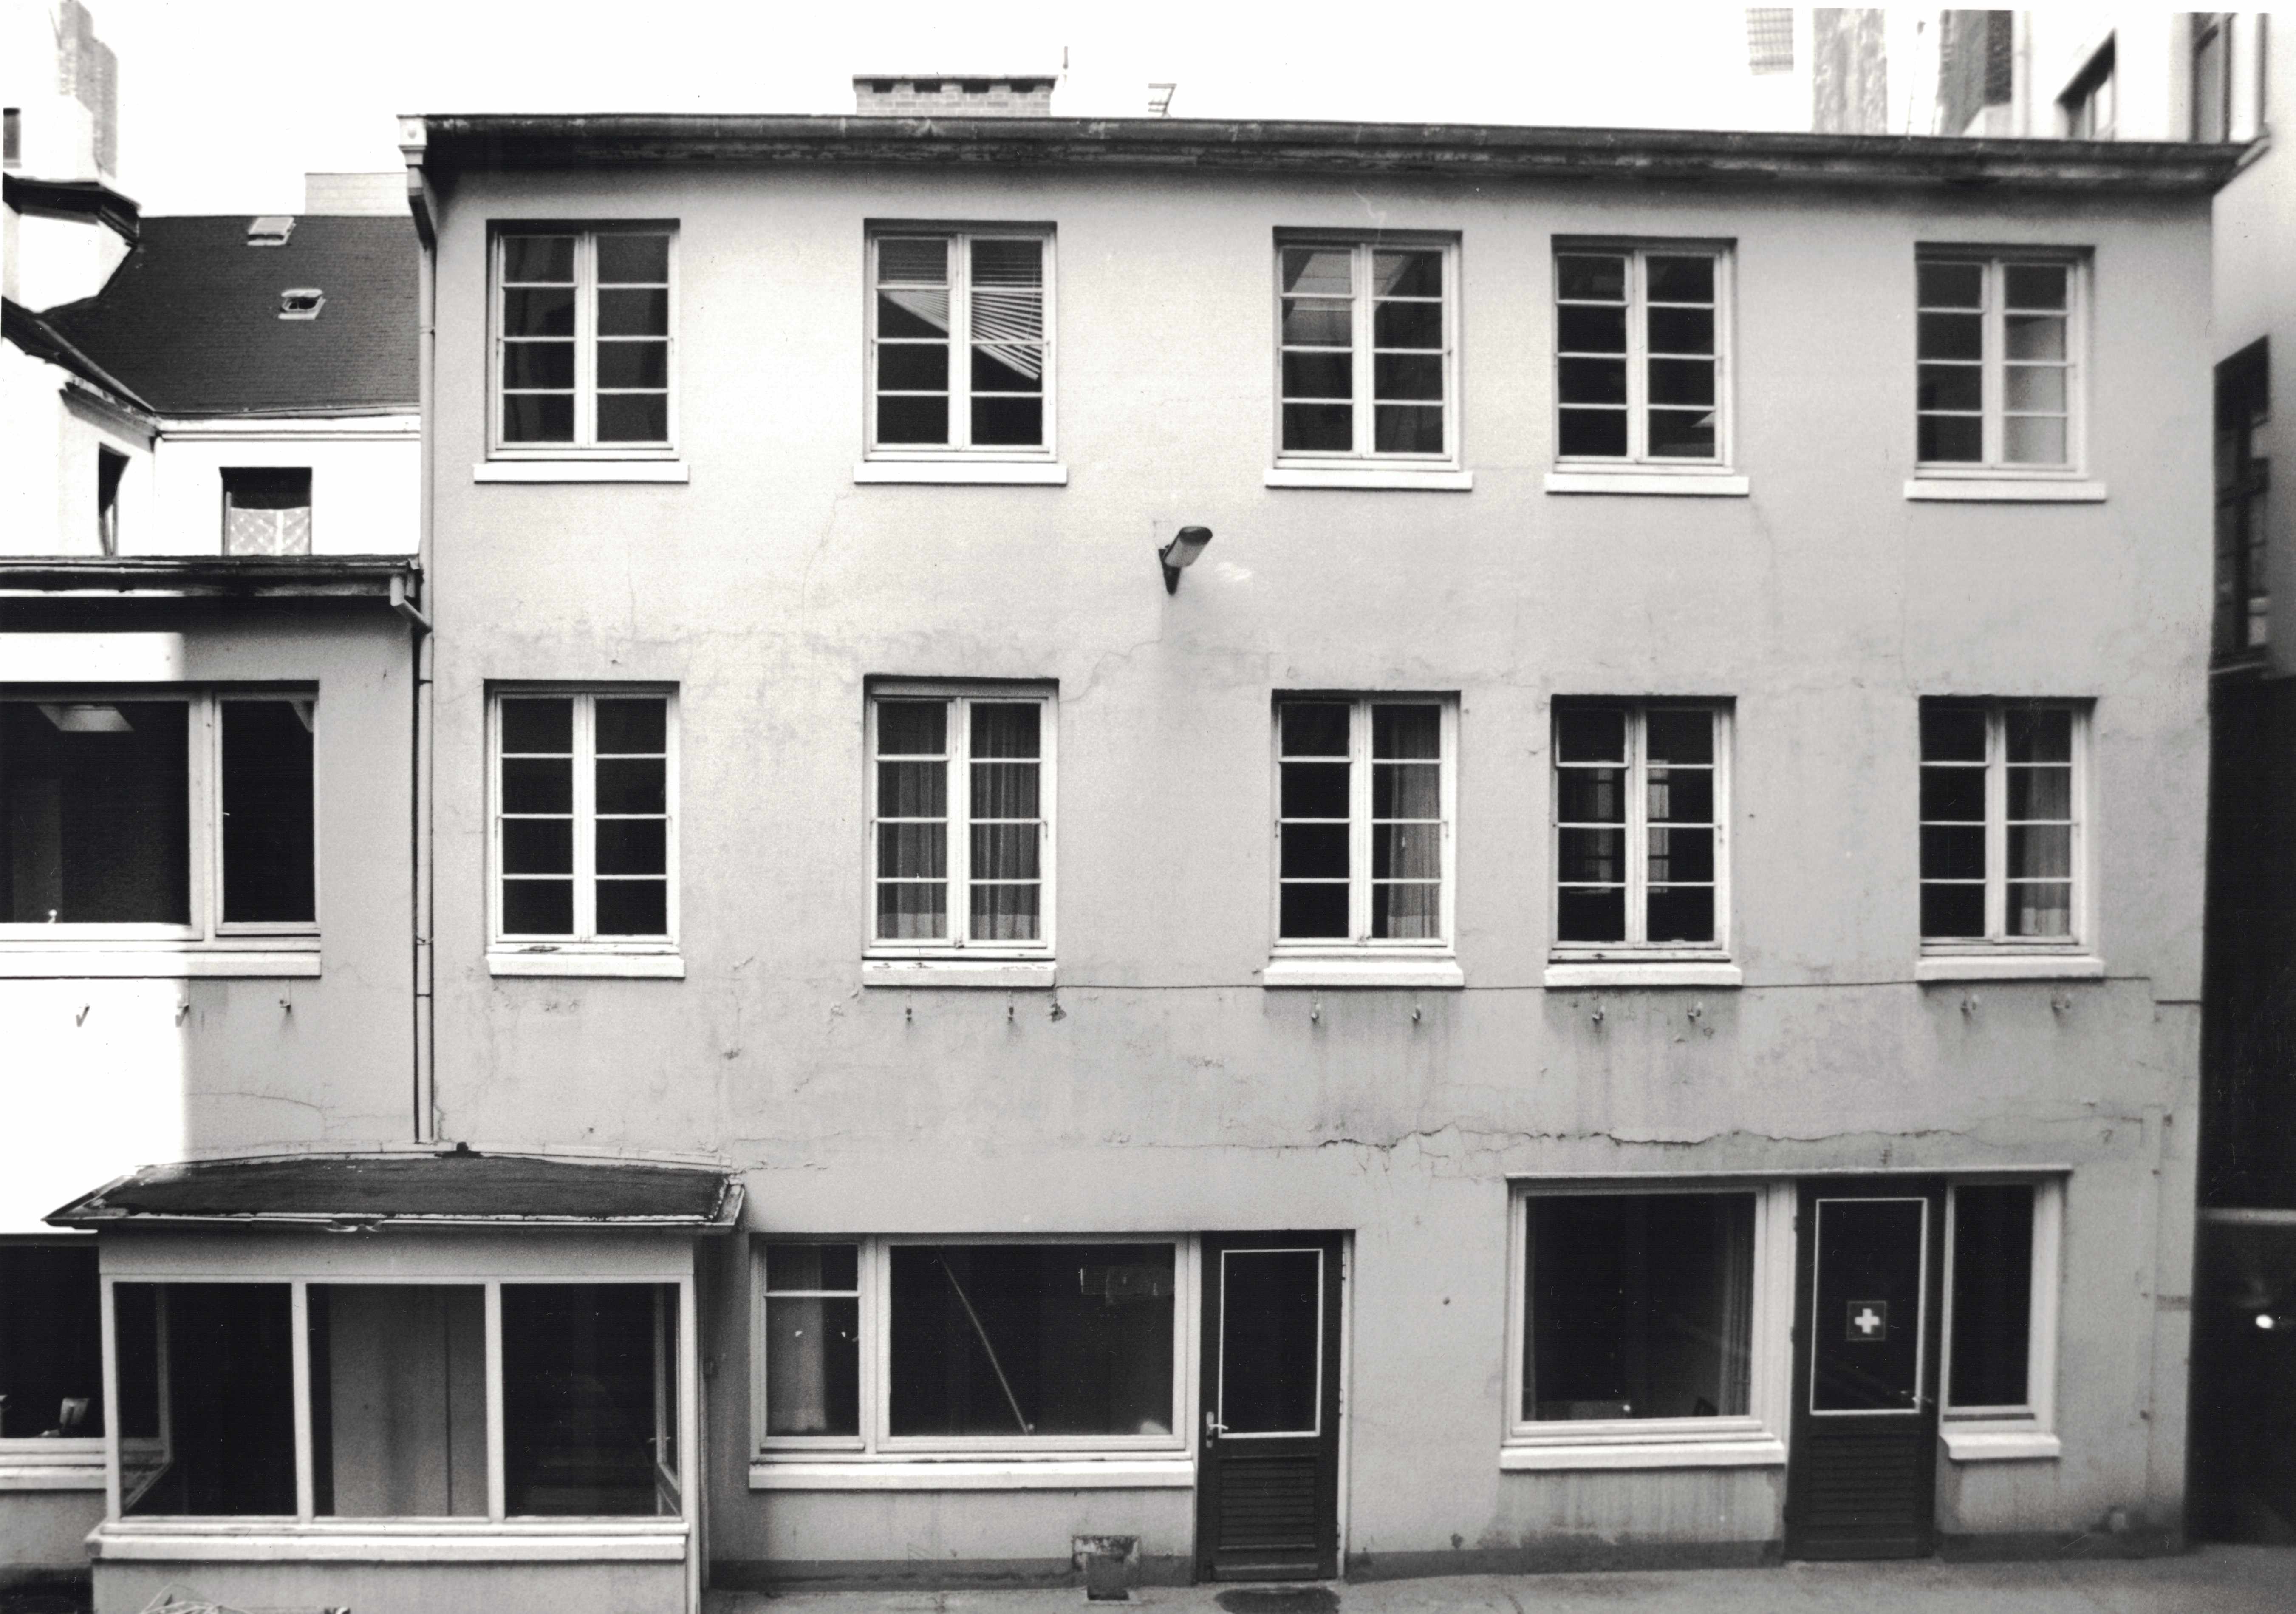 3001 Kino vor dem Umbau, Foto von Wolfgang Morell 1989